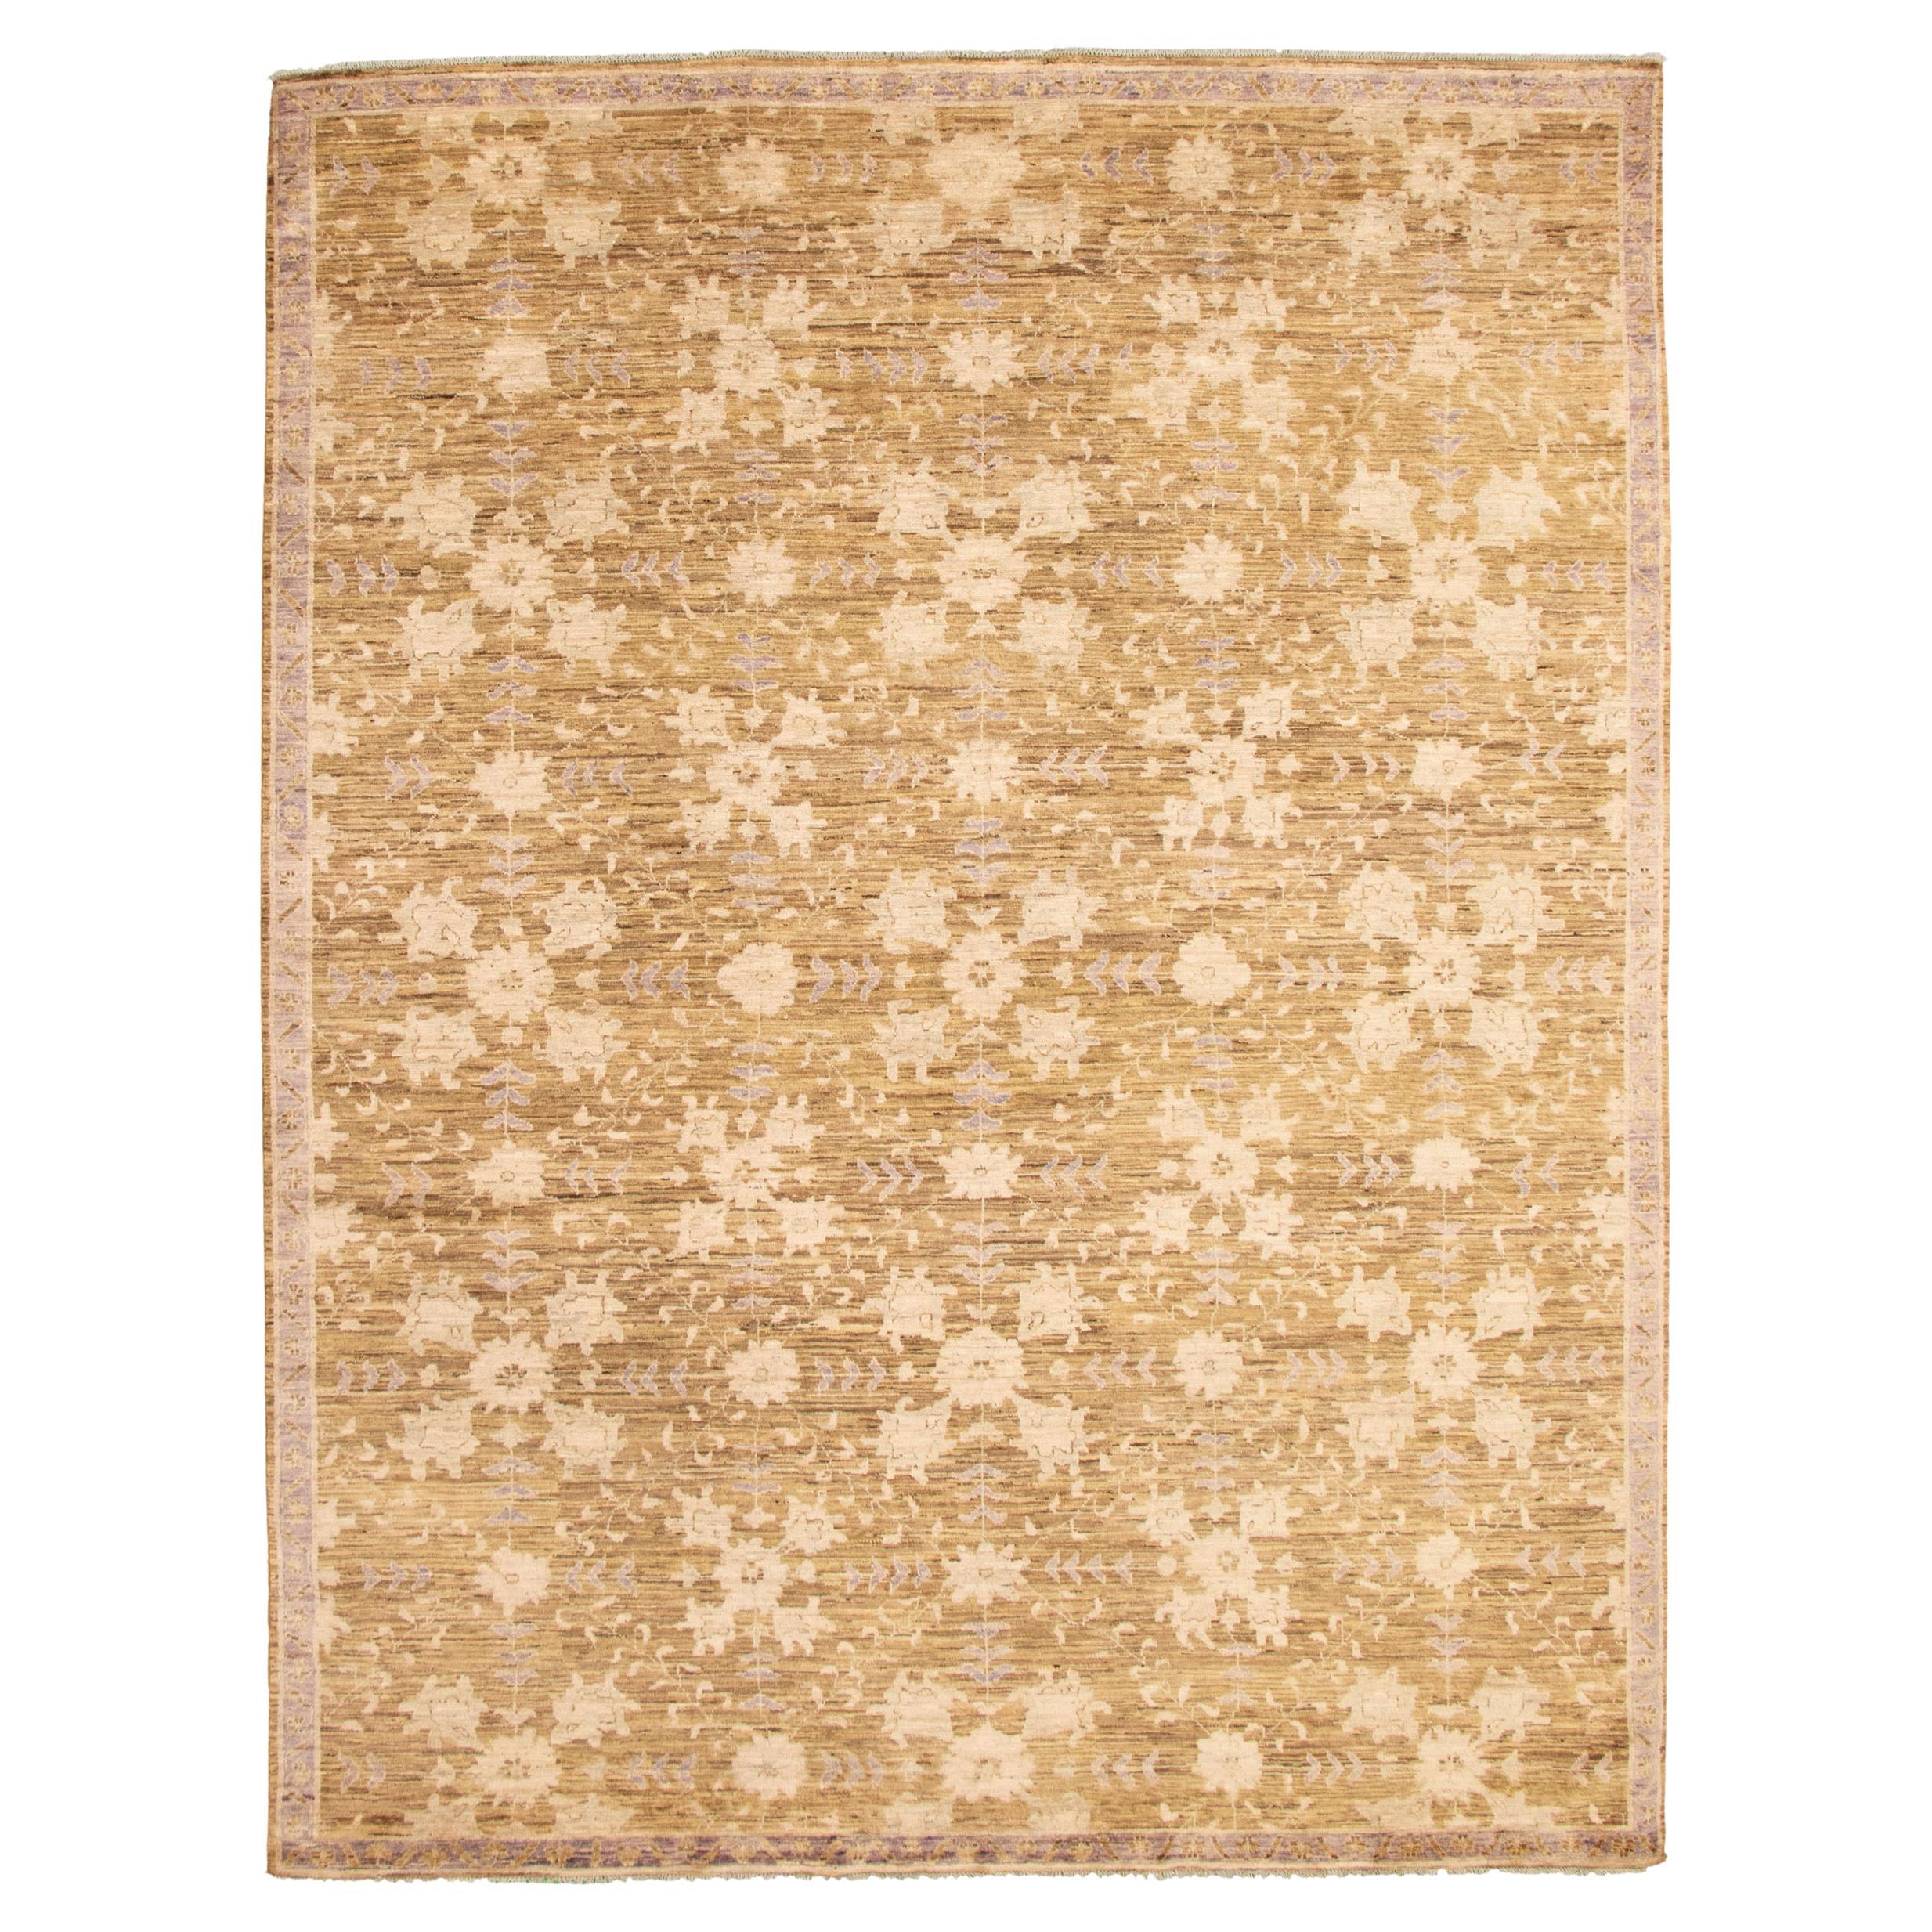 Fine Transitional Neutral Persian Oushak Carpet - 9'x12'